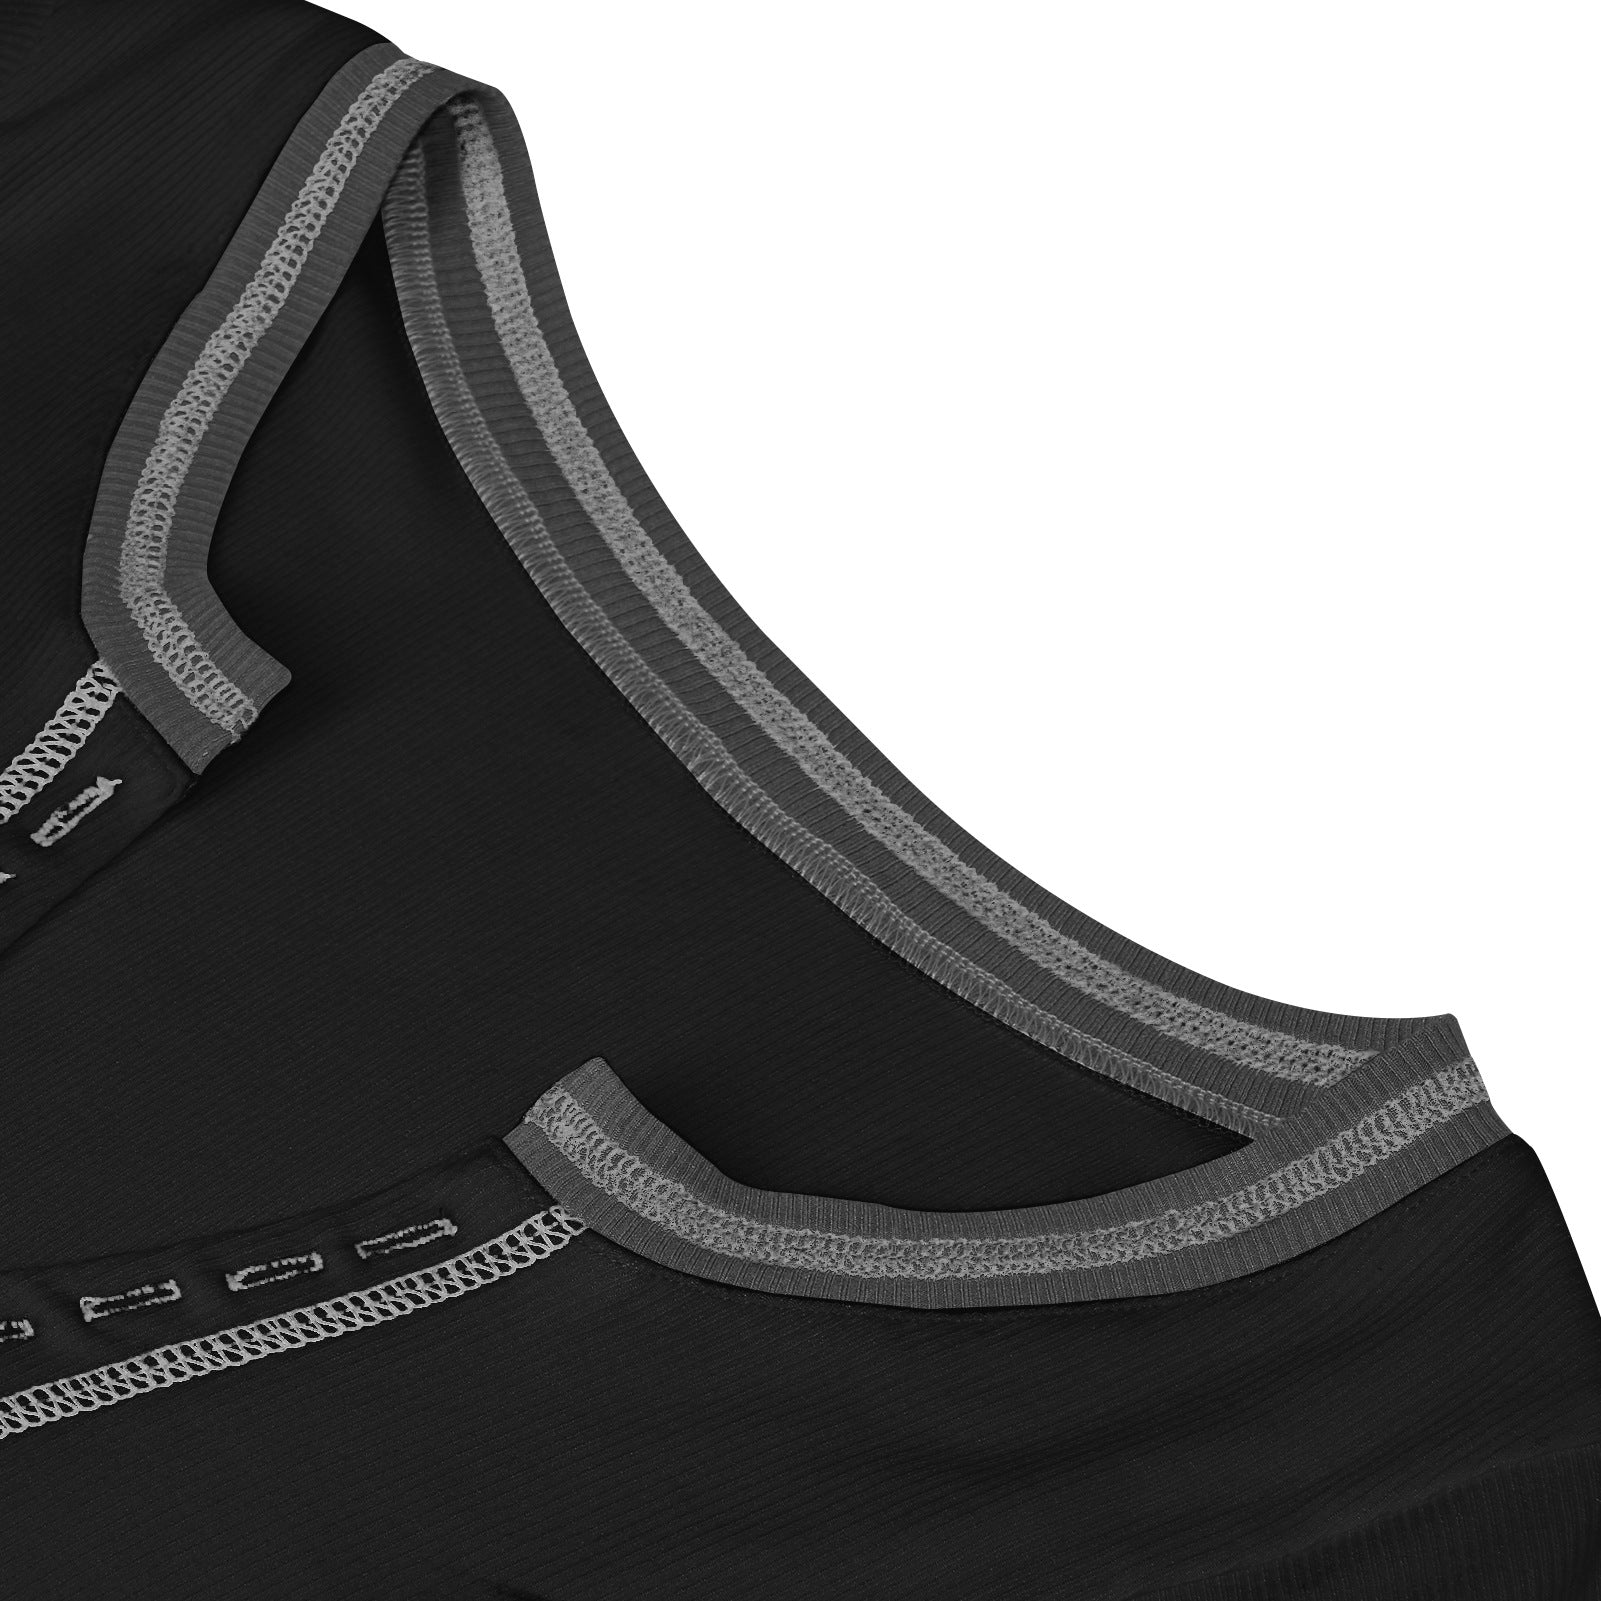 Sexy Designed Midriff Baring Knitted T Shirts-Shirts & Tops-Coffee-XS-Free Shipping Leatheretro